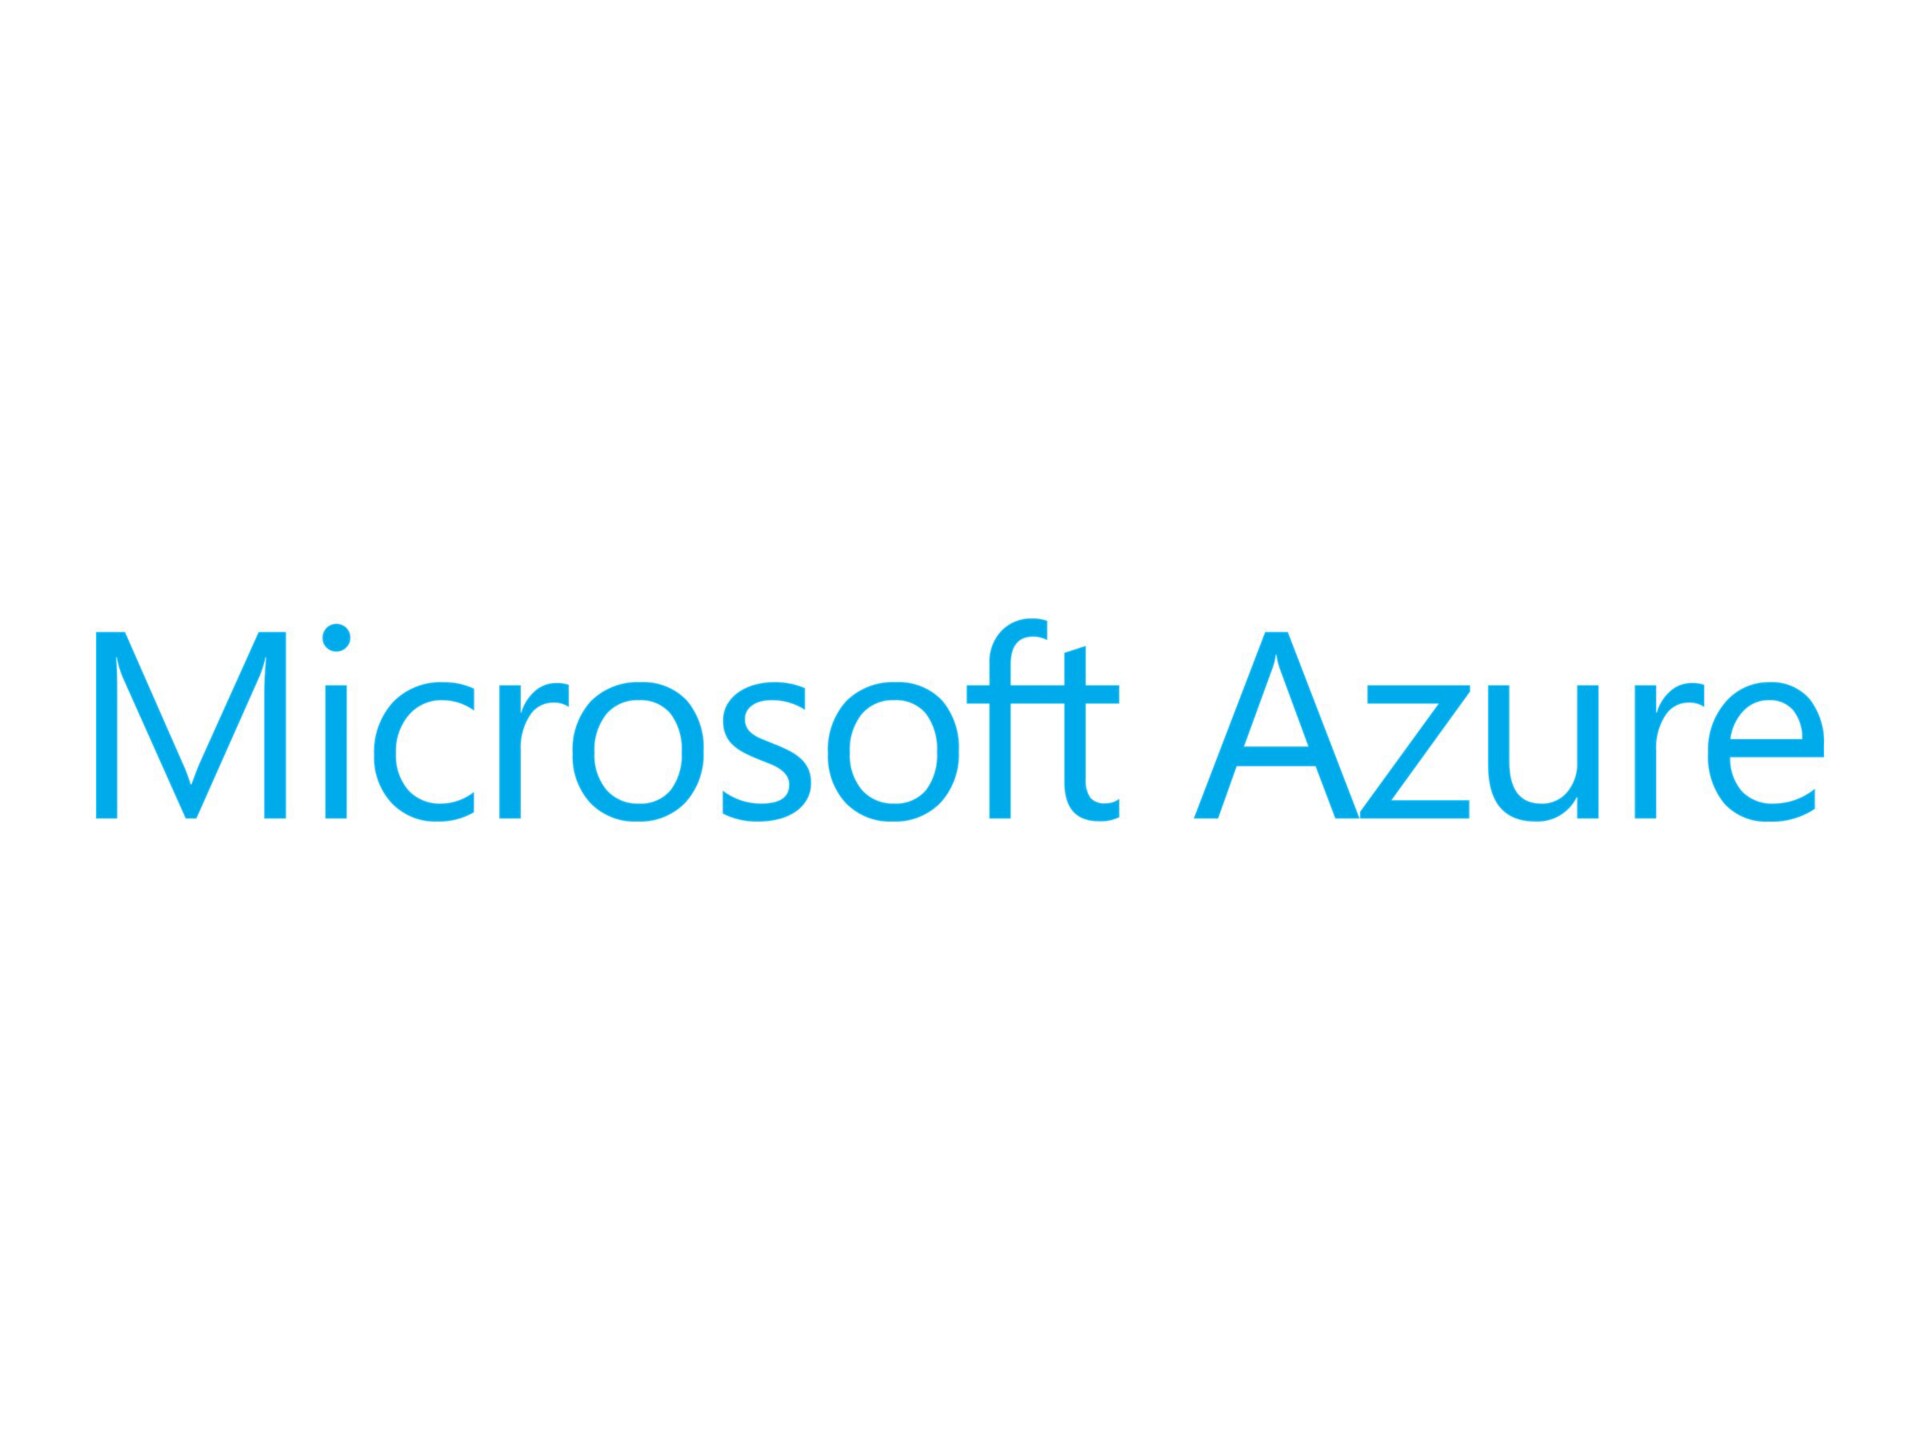 Microsoft Azure CDN Standard from Microsoft - fee - 100 GB data transfer